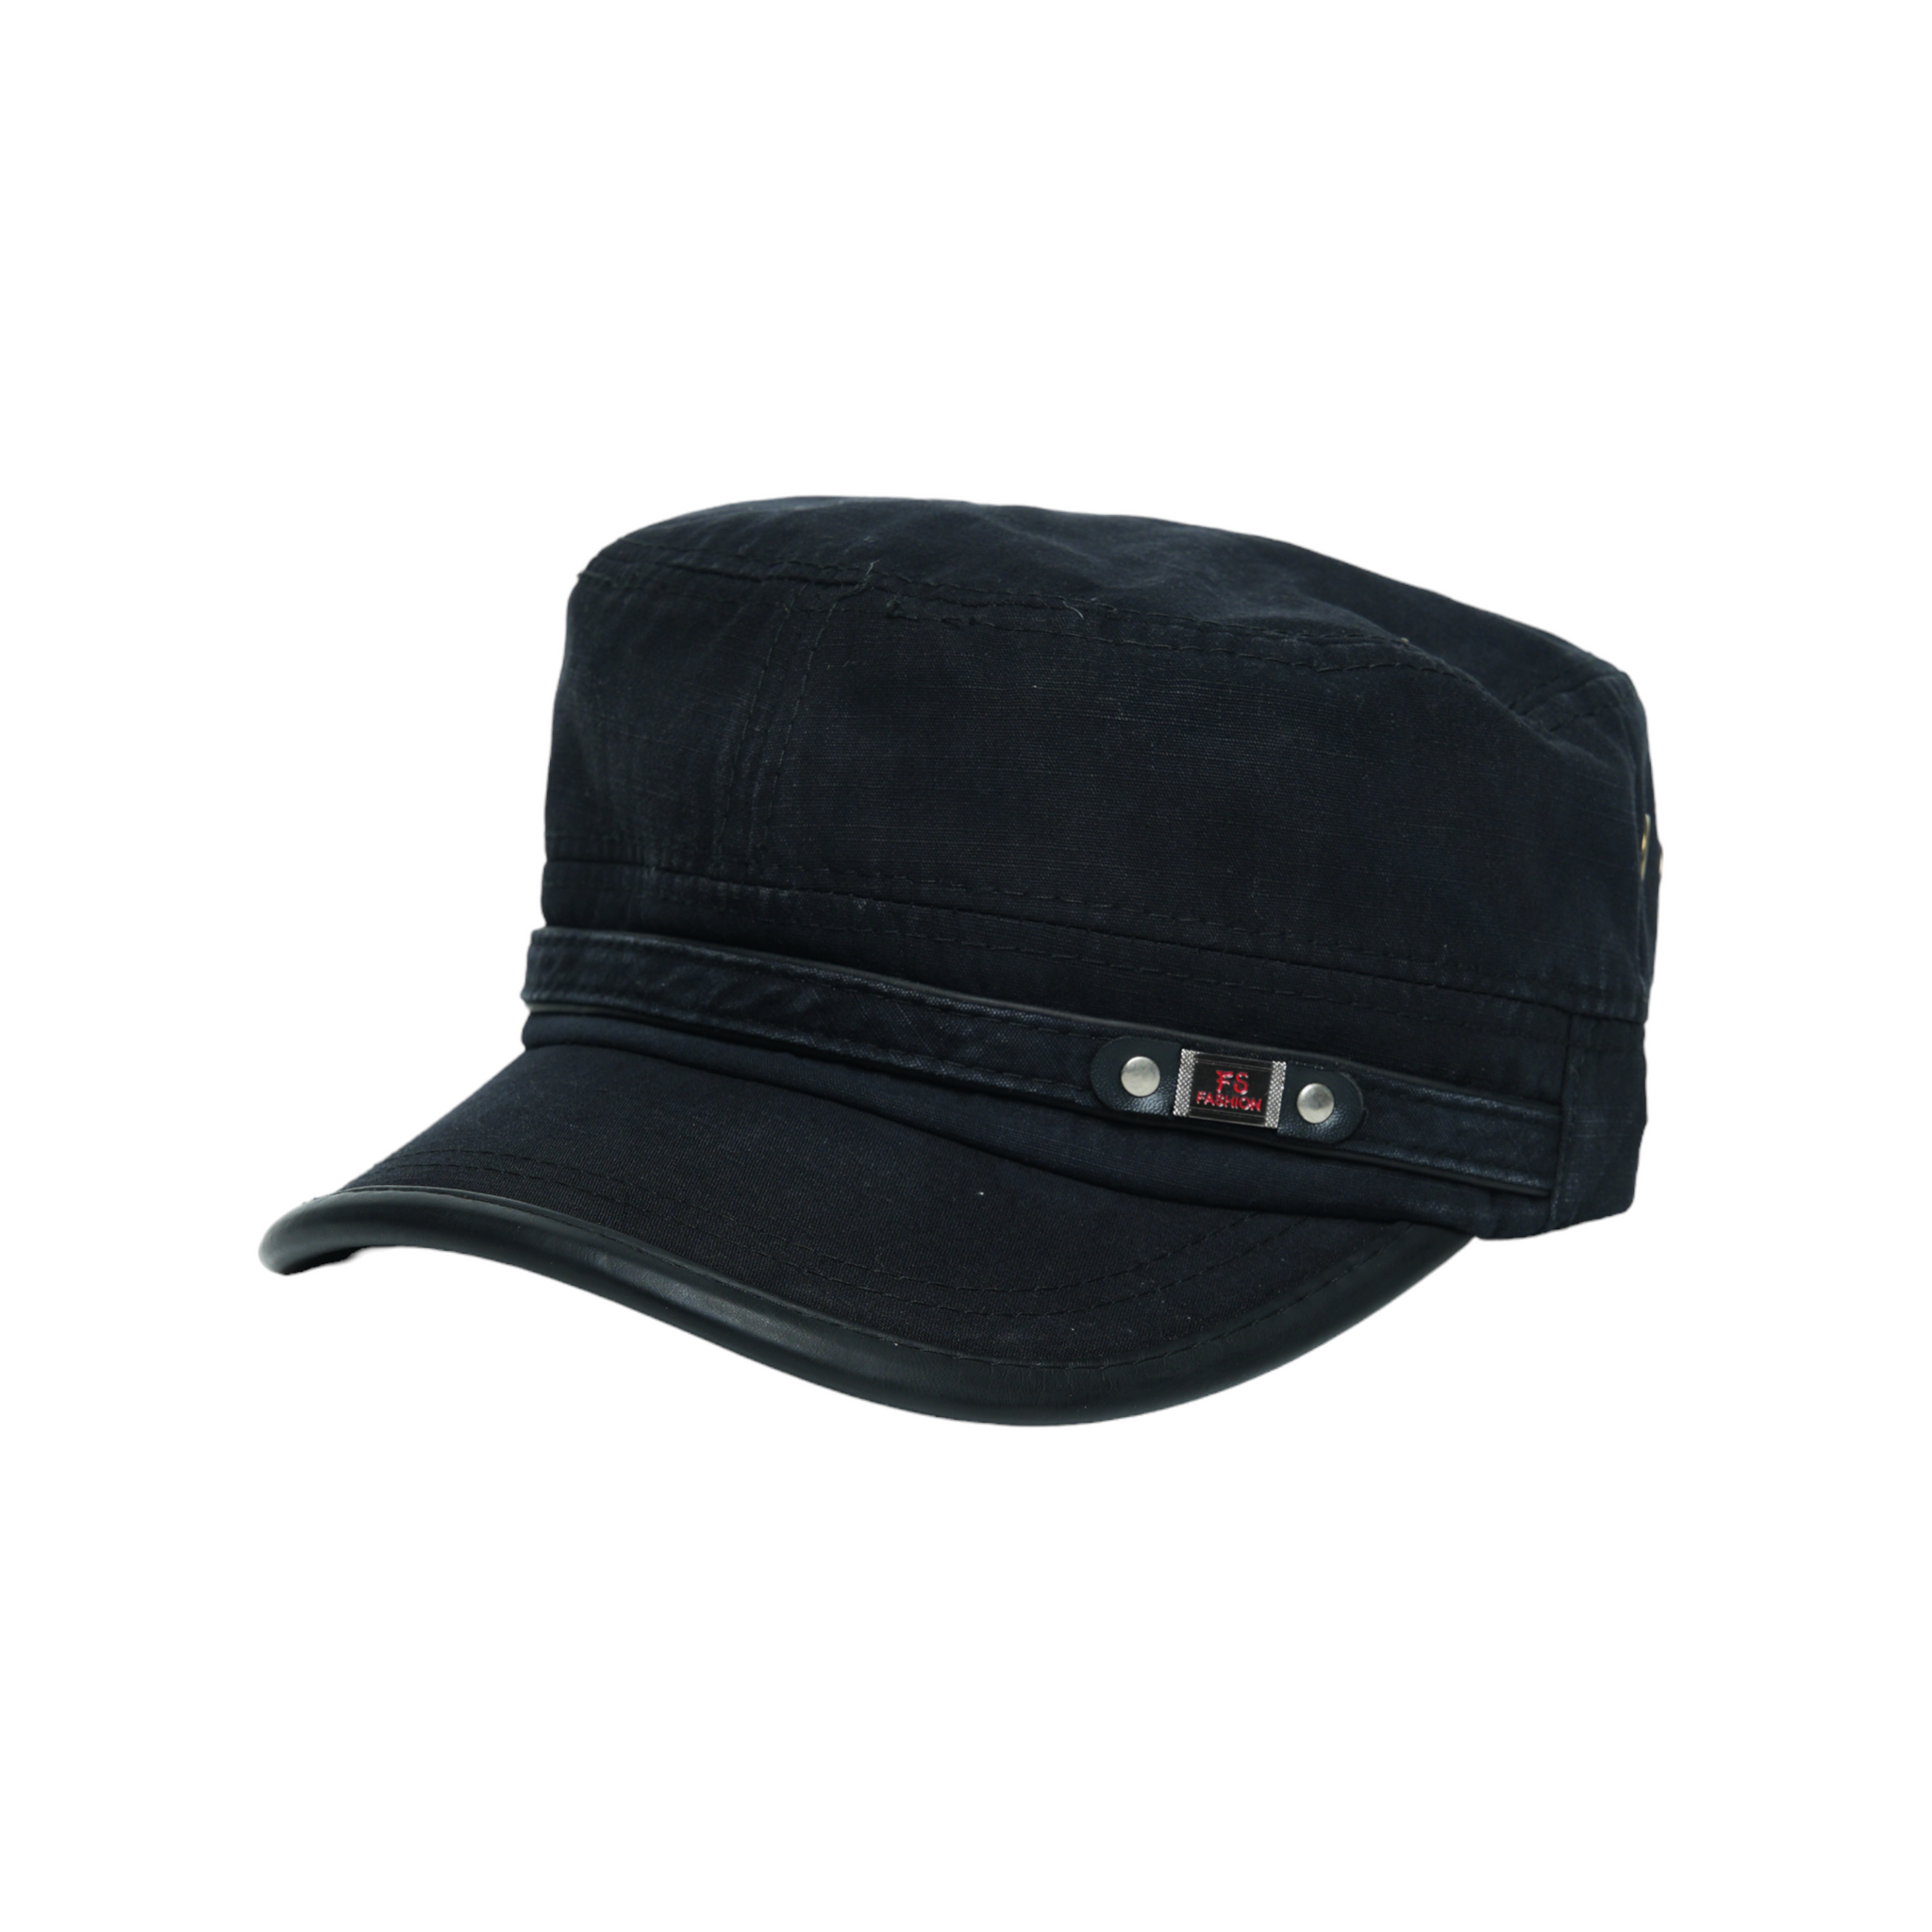 Chokore Retro Washed Flat Top Cap (Black)